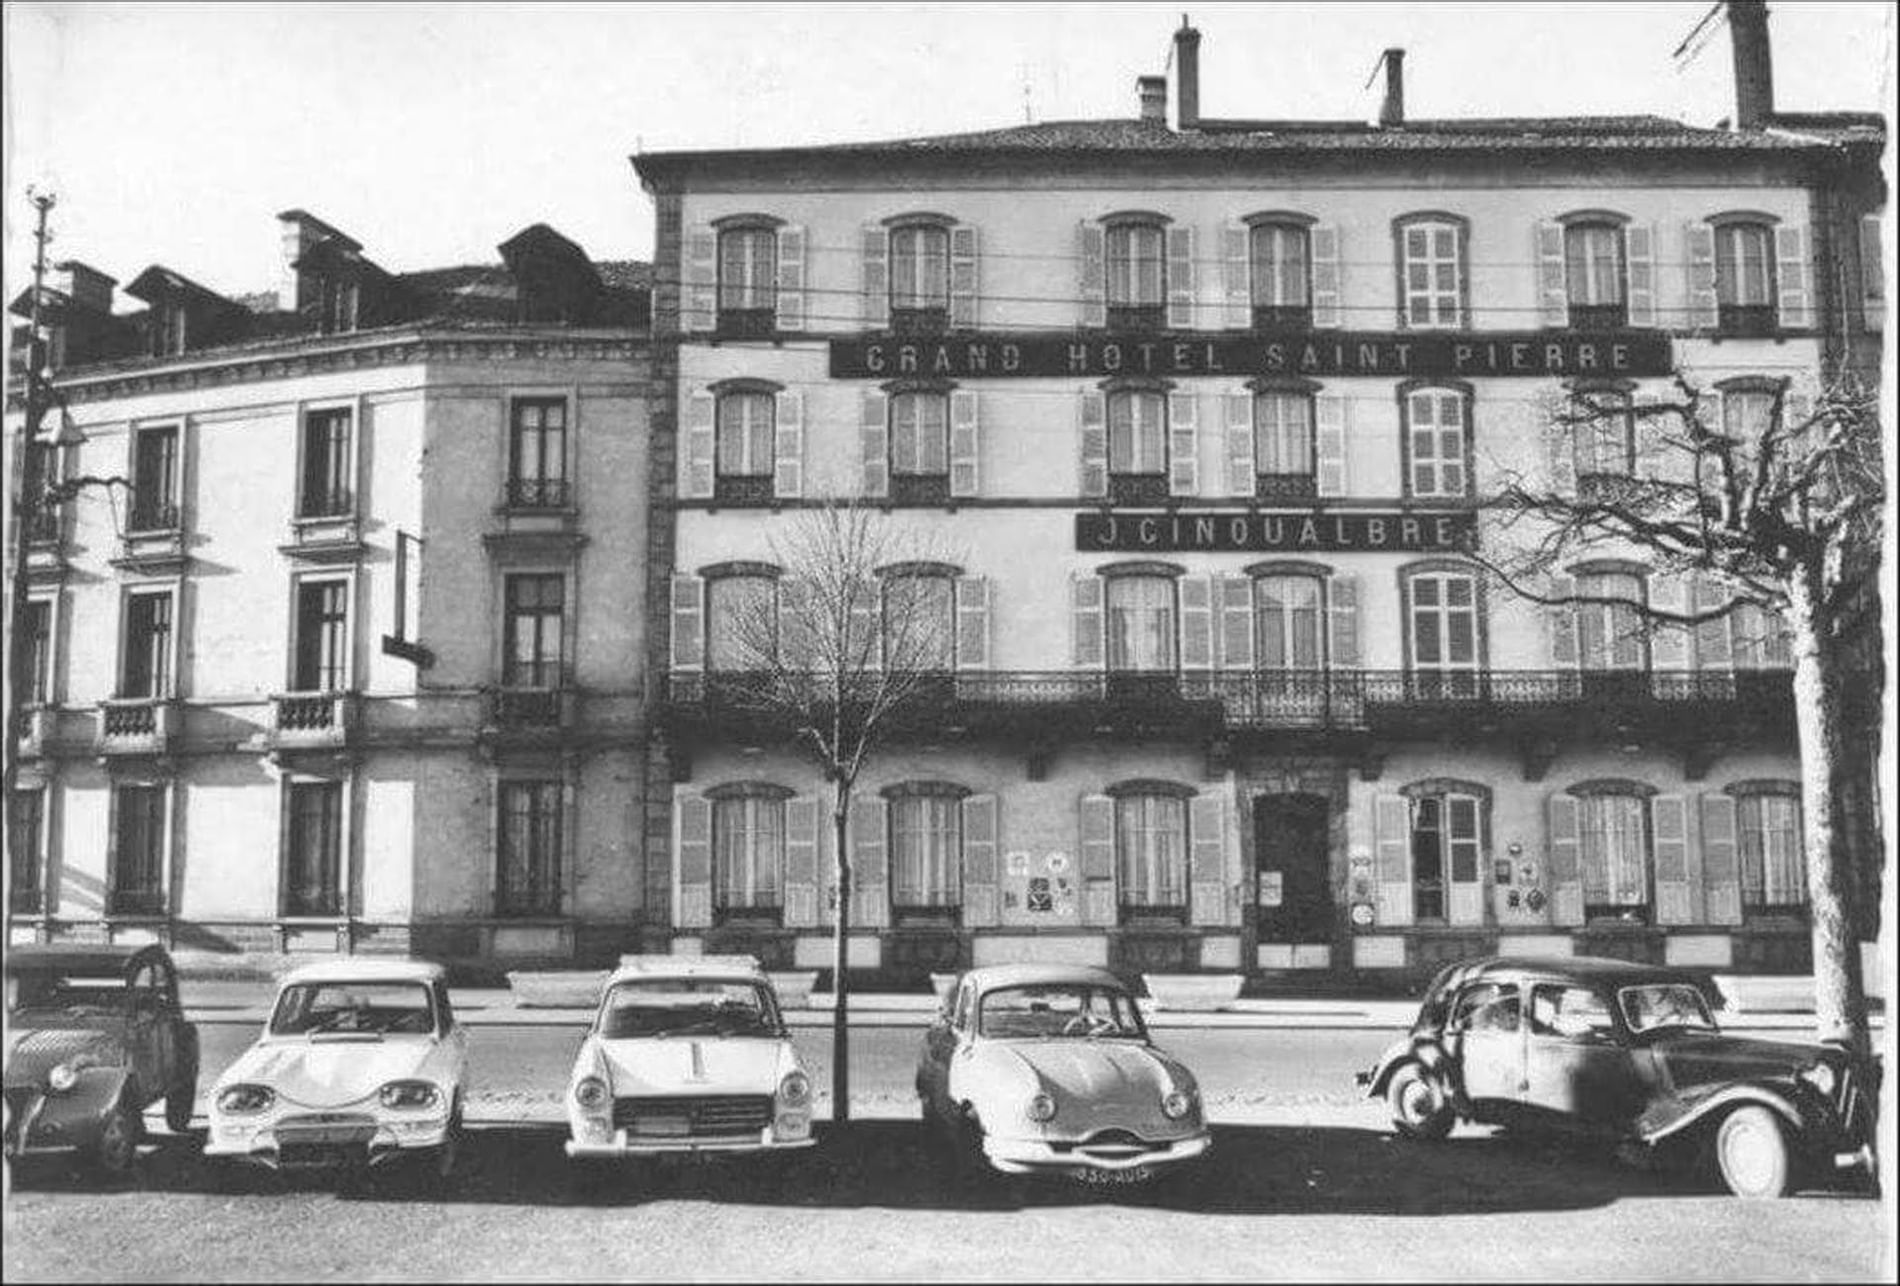 An exterior view of the Grand Hôtel Saint-Pierre